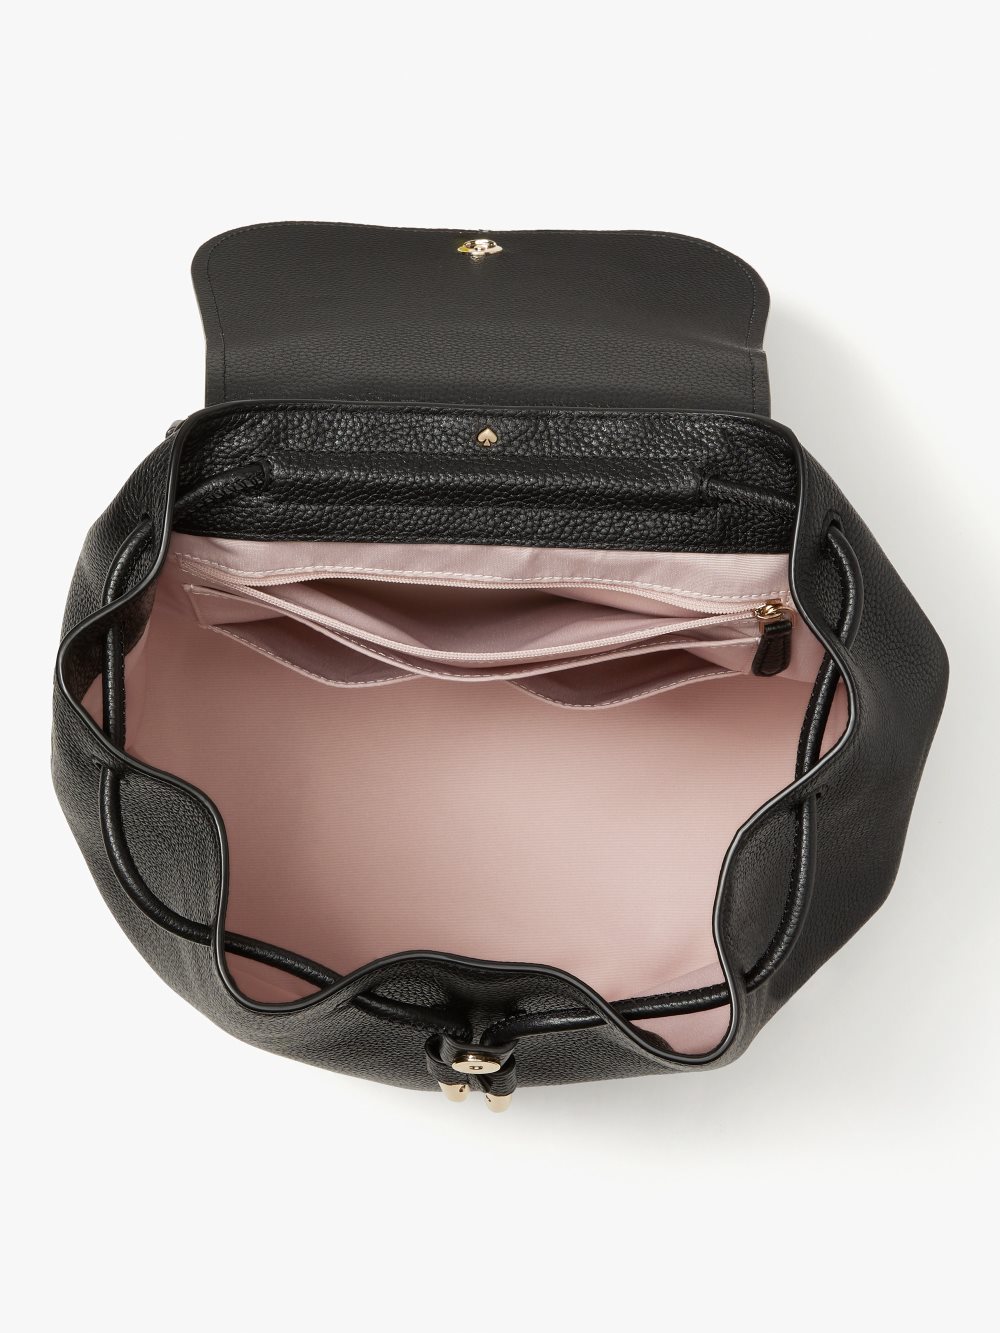 Women's black sinch pebbled leather medium flap backpack | Kate Spade